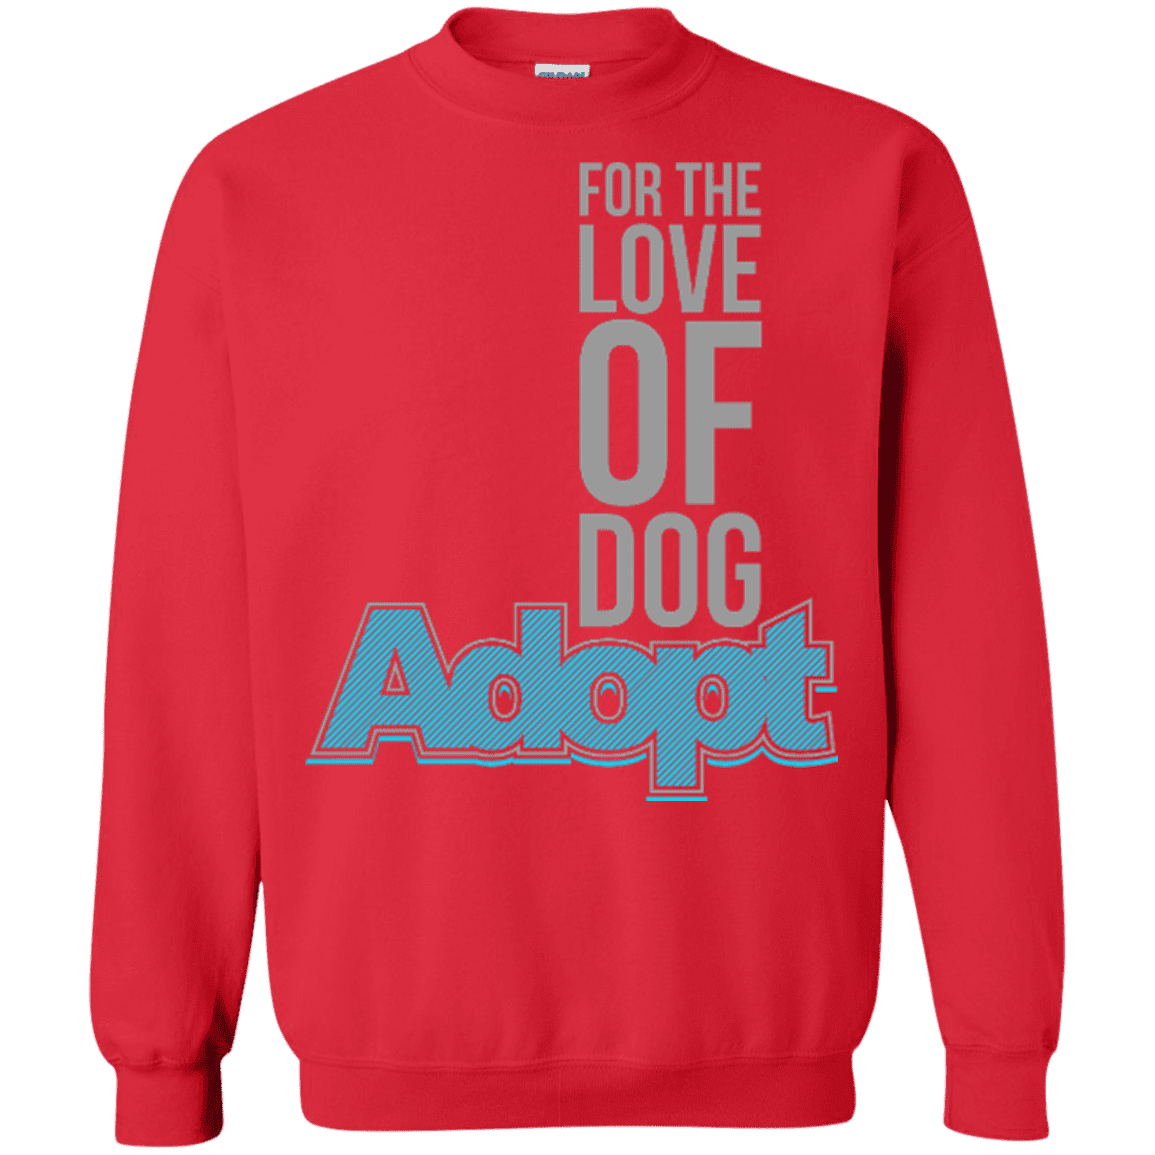 For The Love Of Dog Adopt - Sweatshirt.